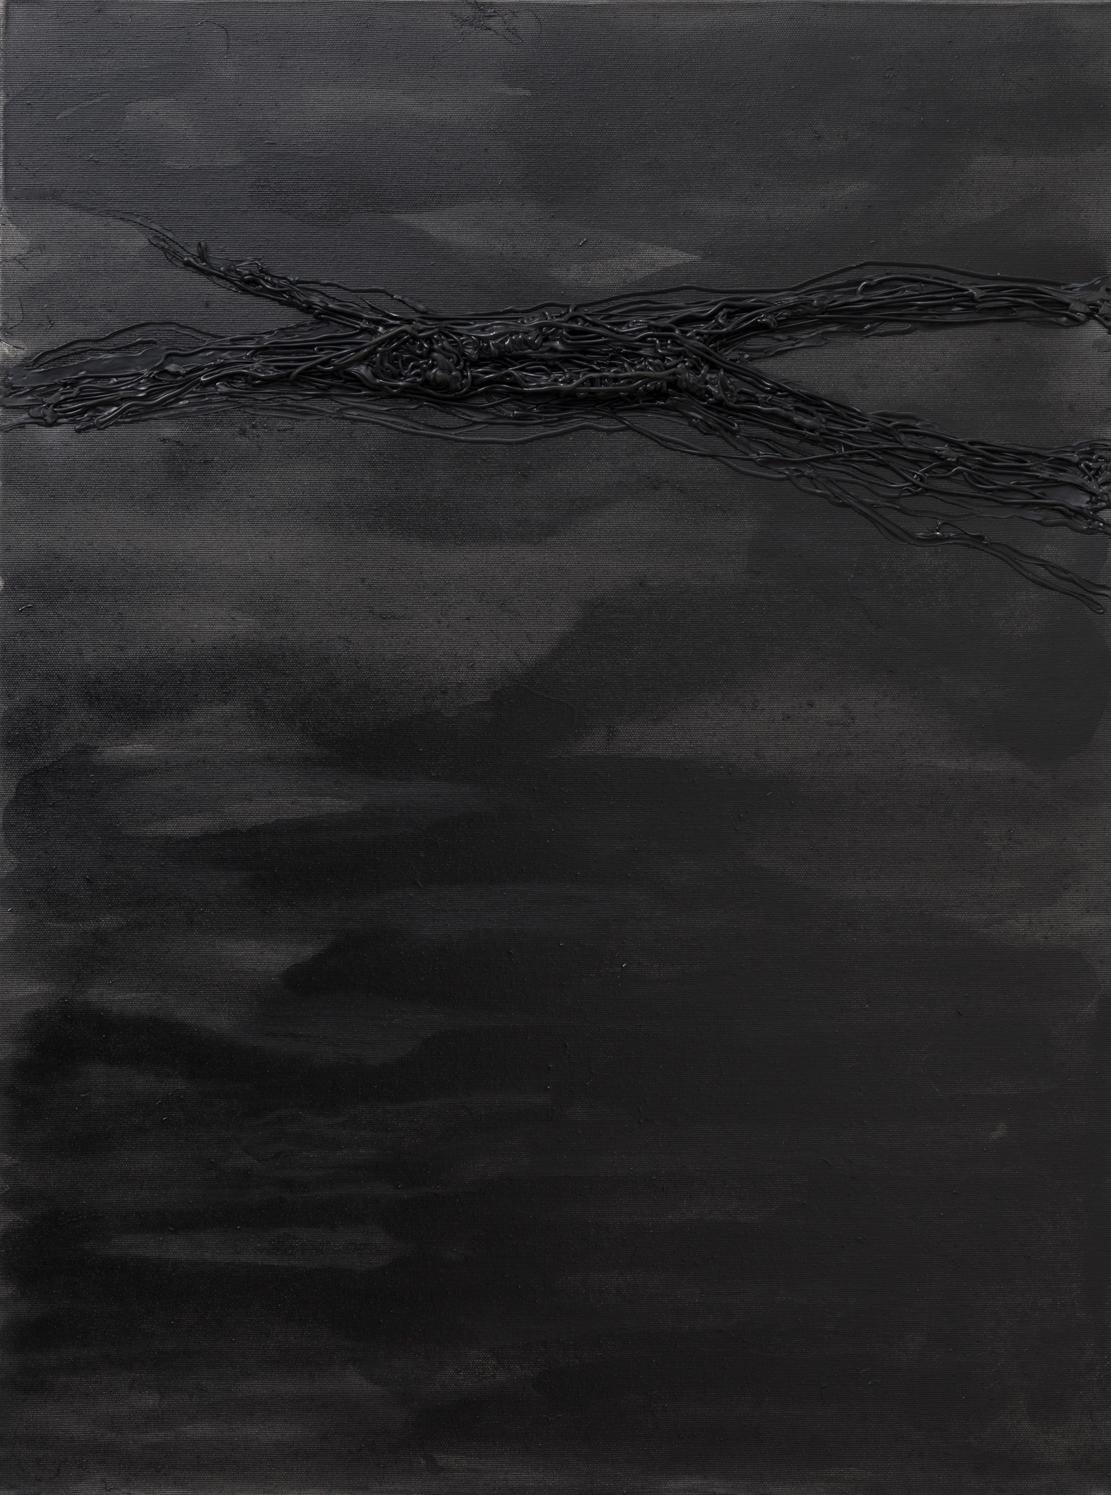 Untitled 04 - Contemporary, Black, Monochrome, Minimalist, Organic, Abstract Art